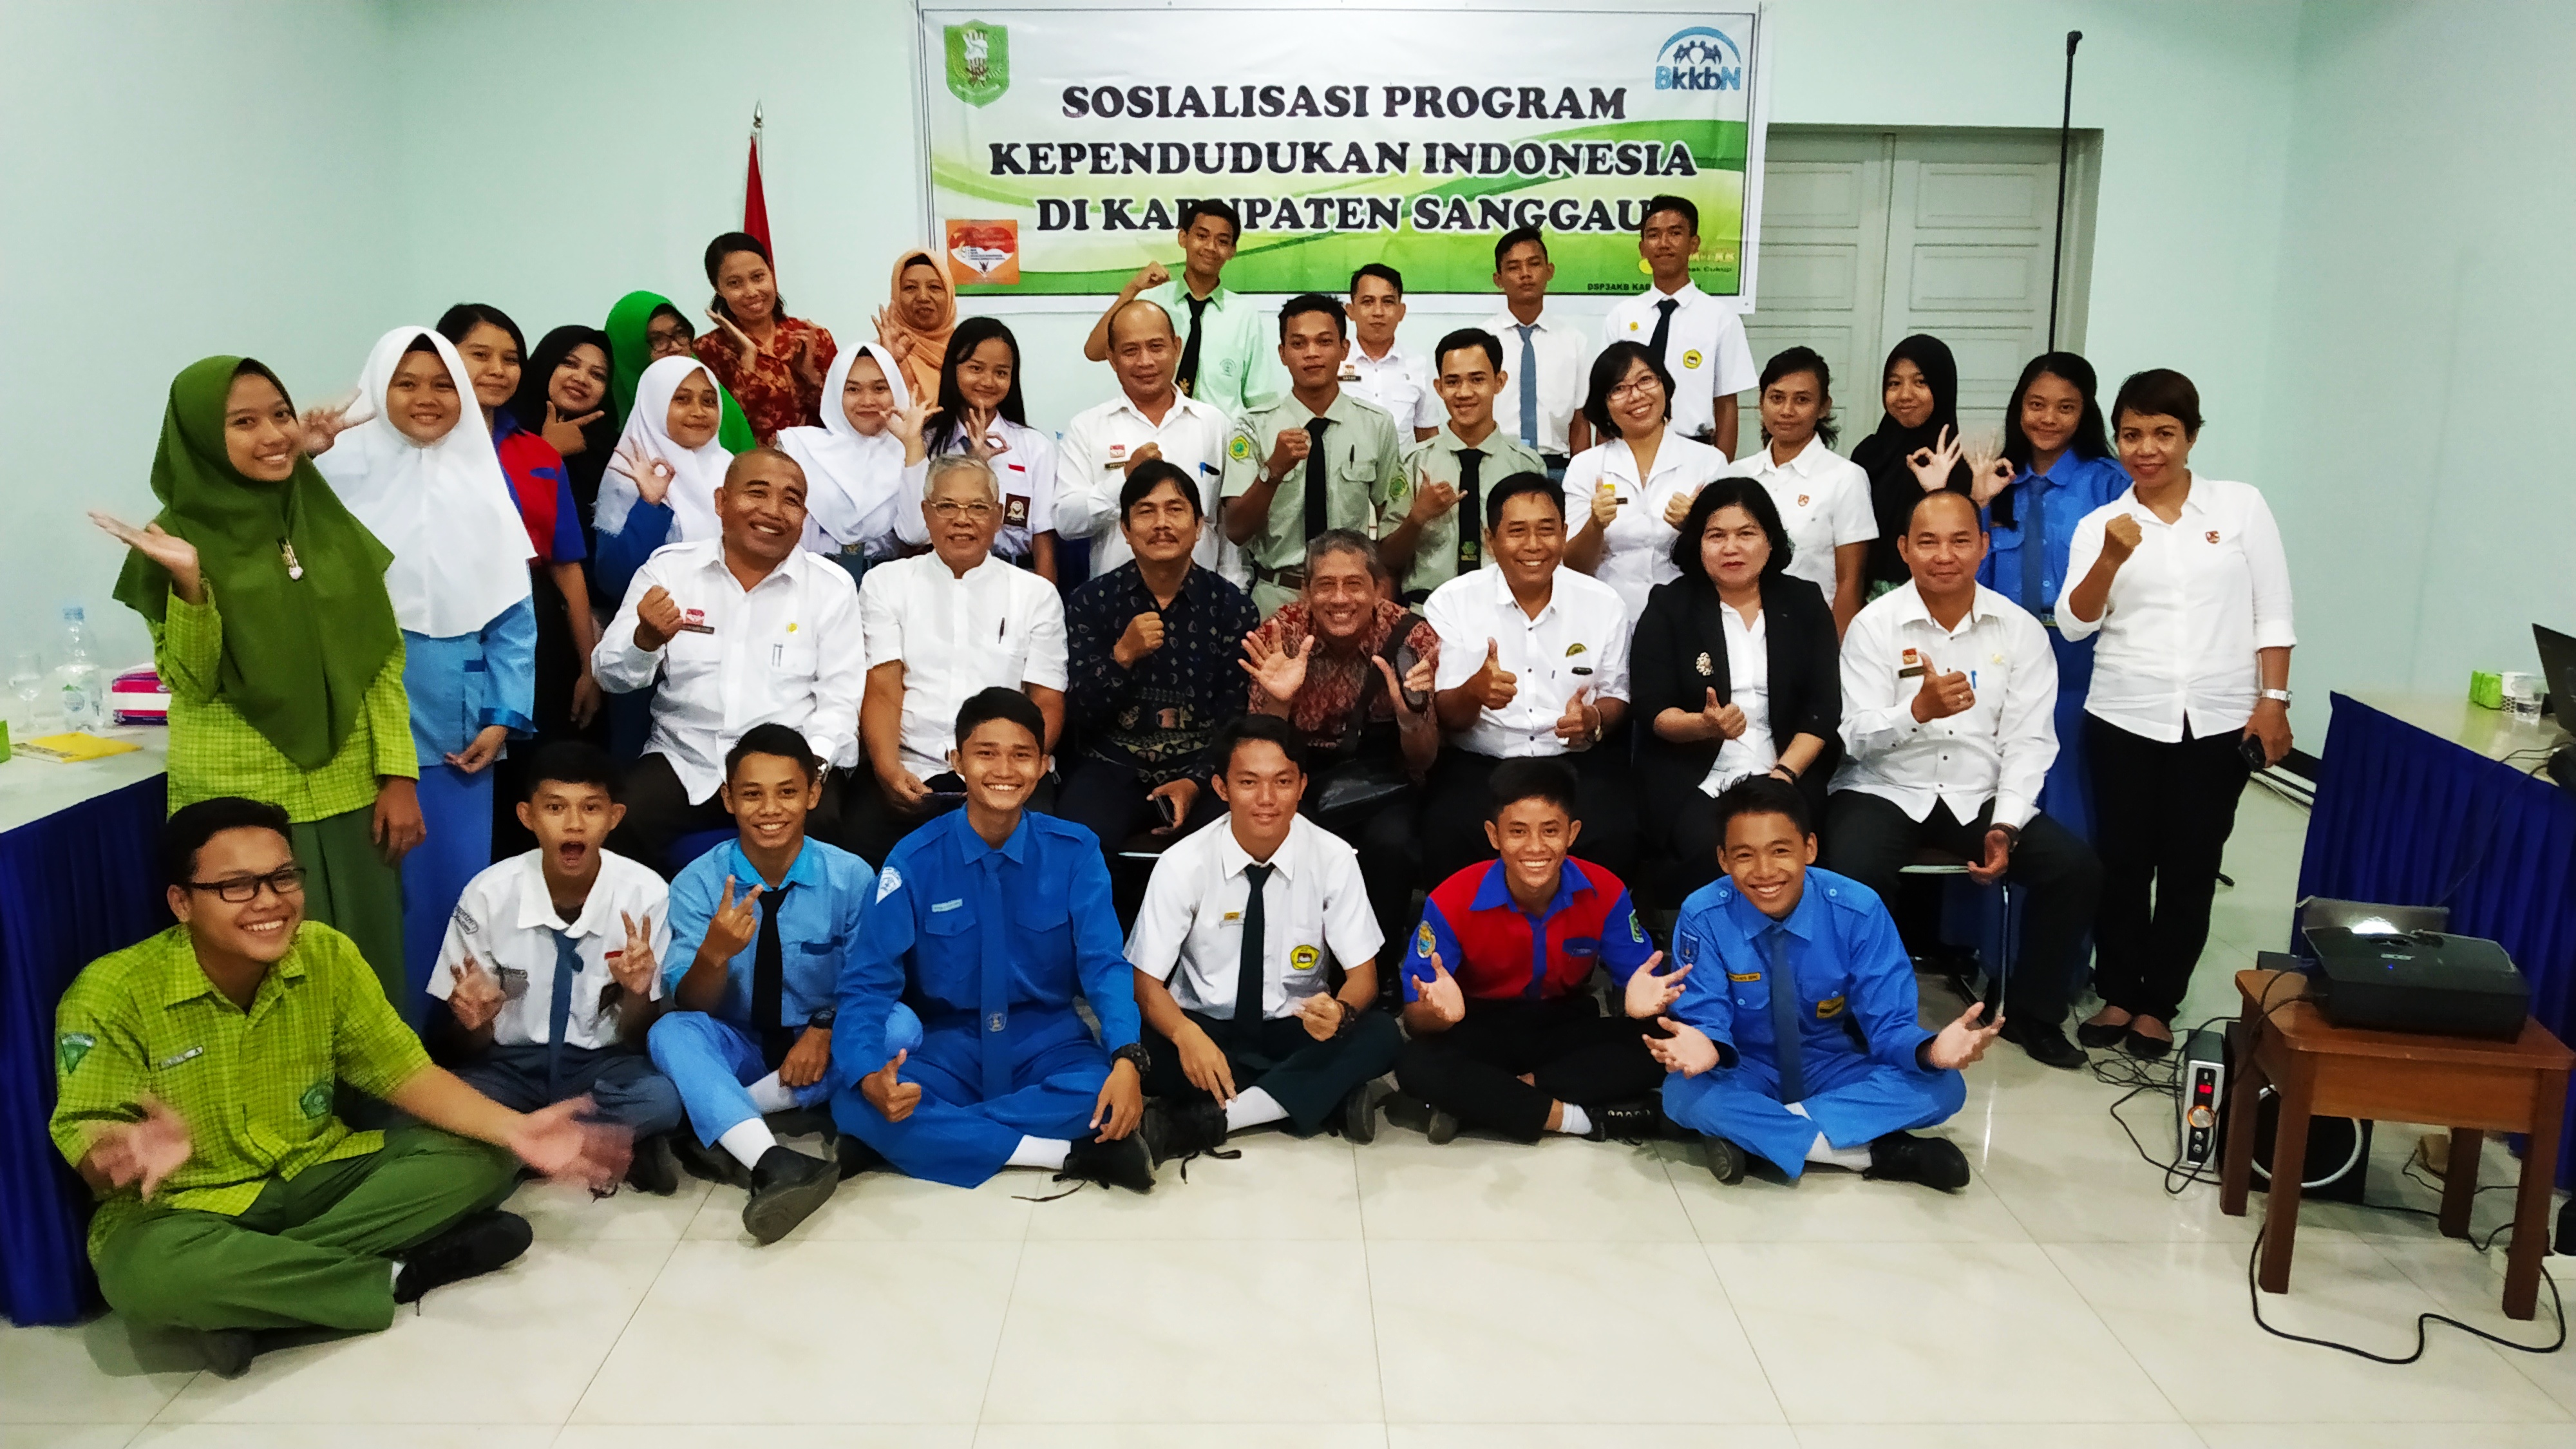 Sosialisasi Program Kependudukan Indonesia, Wujudkan SDM Unggul Indonesia Maju